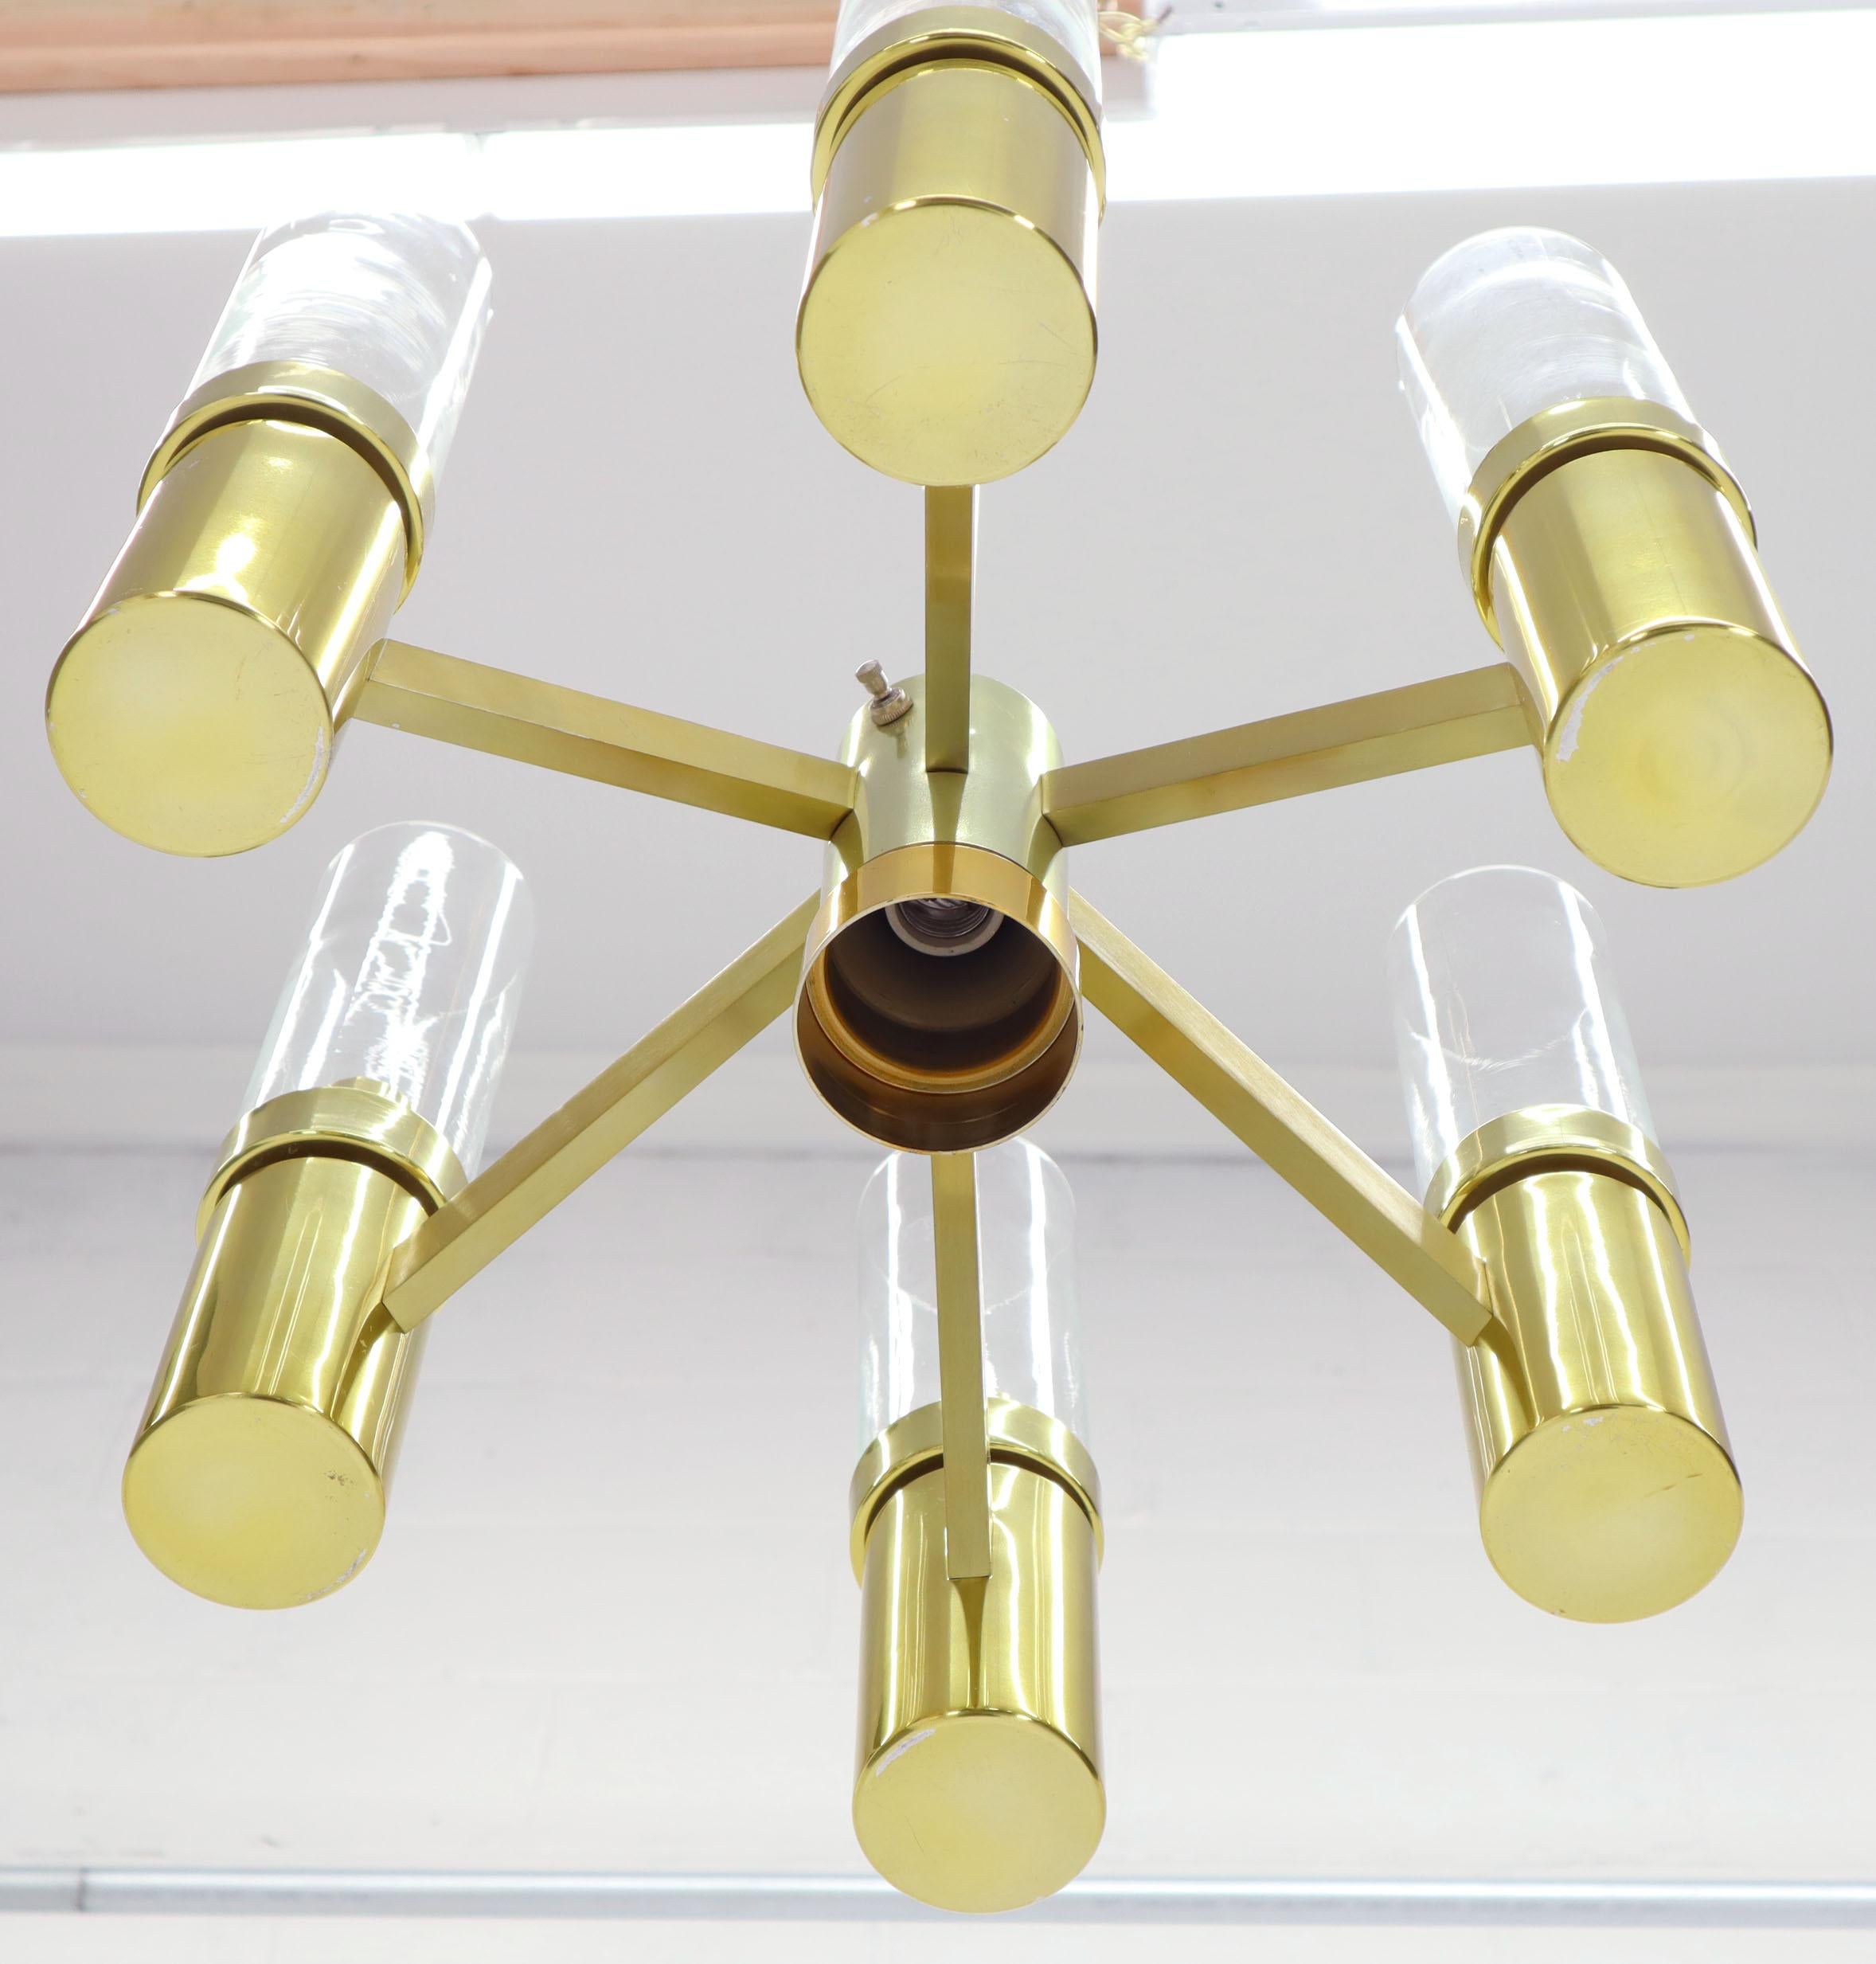 7 Bulbs 6 Point Geometric 3 Way Italian Light Fixture Chandelier Parzinger Style In Good Condition For Sale In Rockaway, NJ